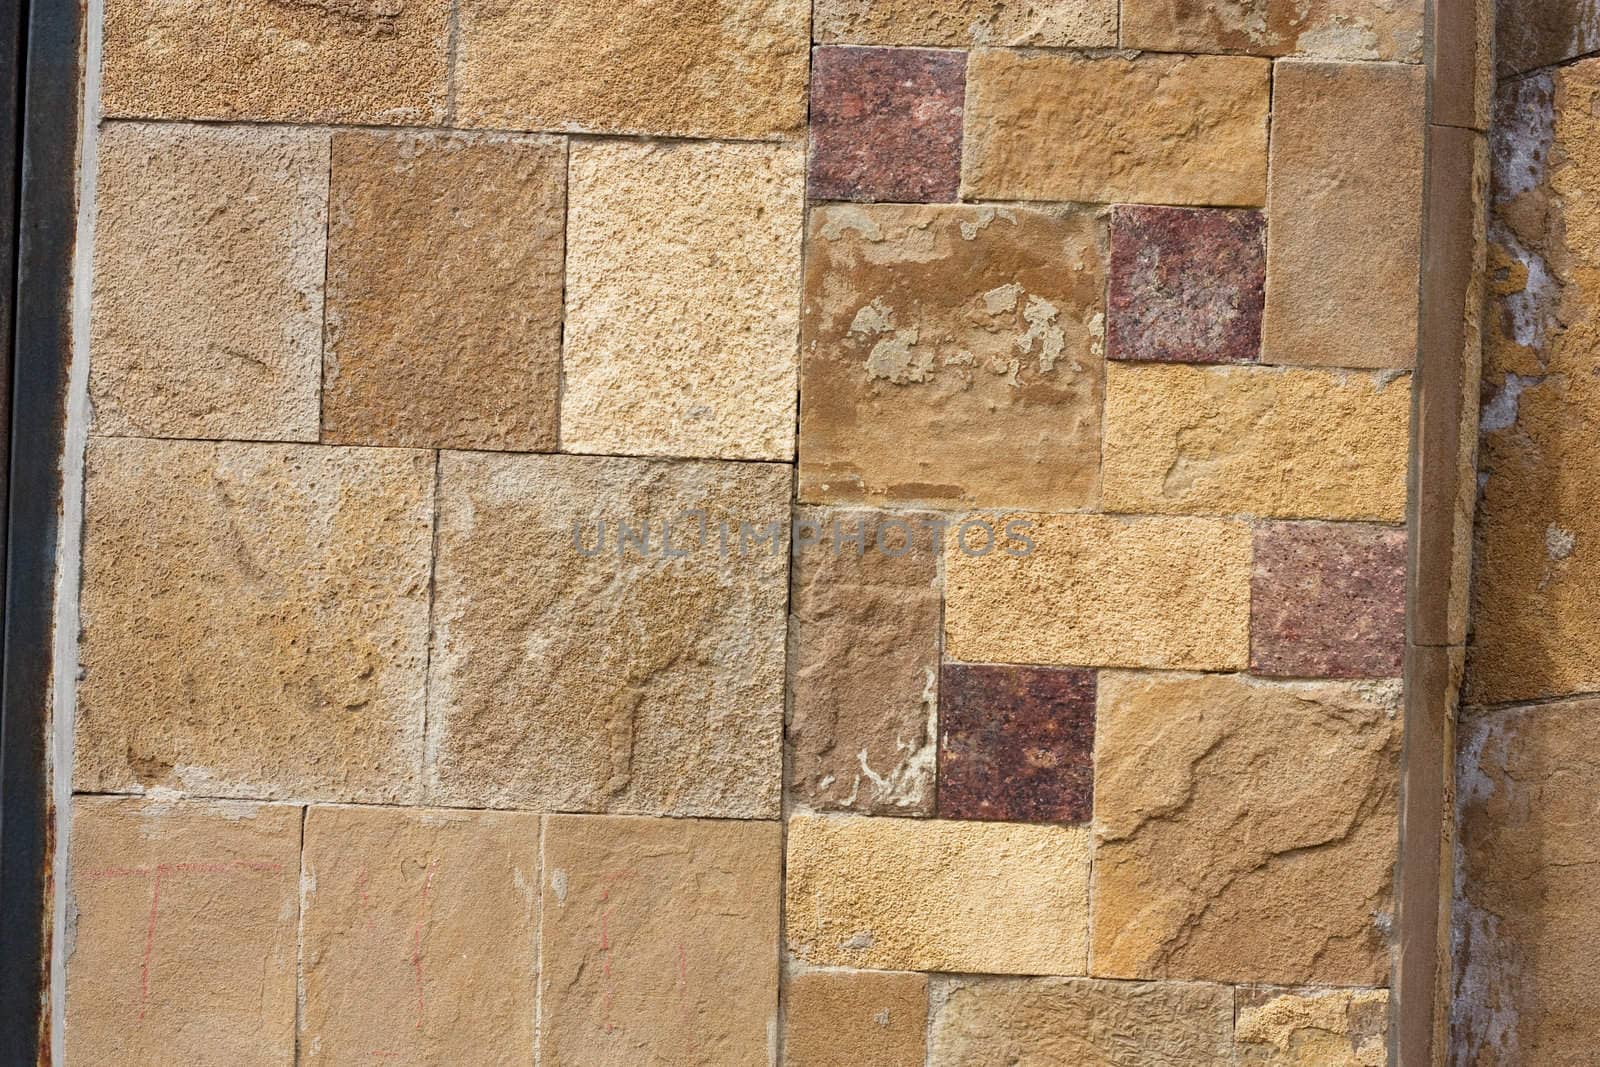 Unshaped stone wall pattern,wall made of rocks  by schankz